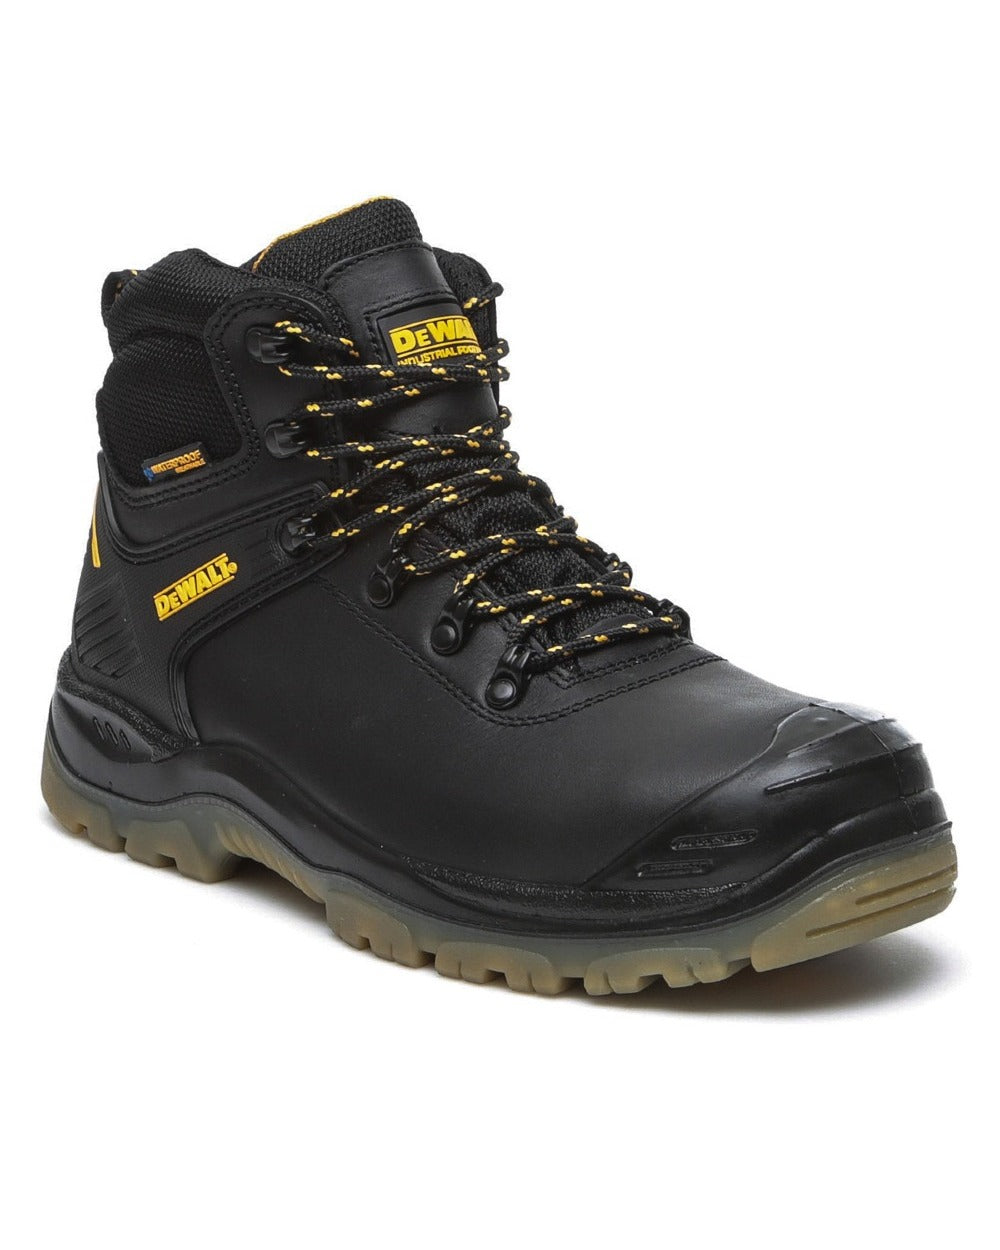 DeWalt Newark Waterproof Safety Hiker Boots in Black 